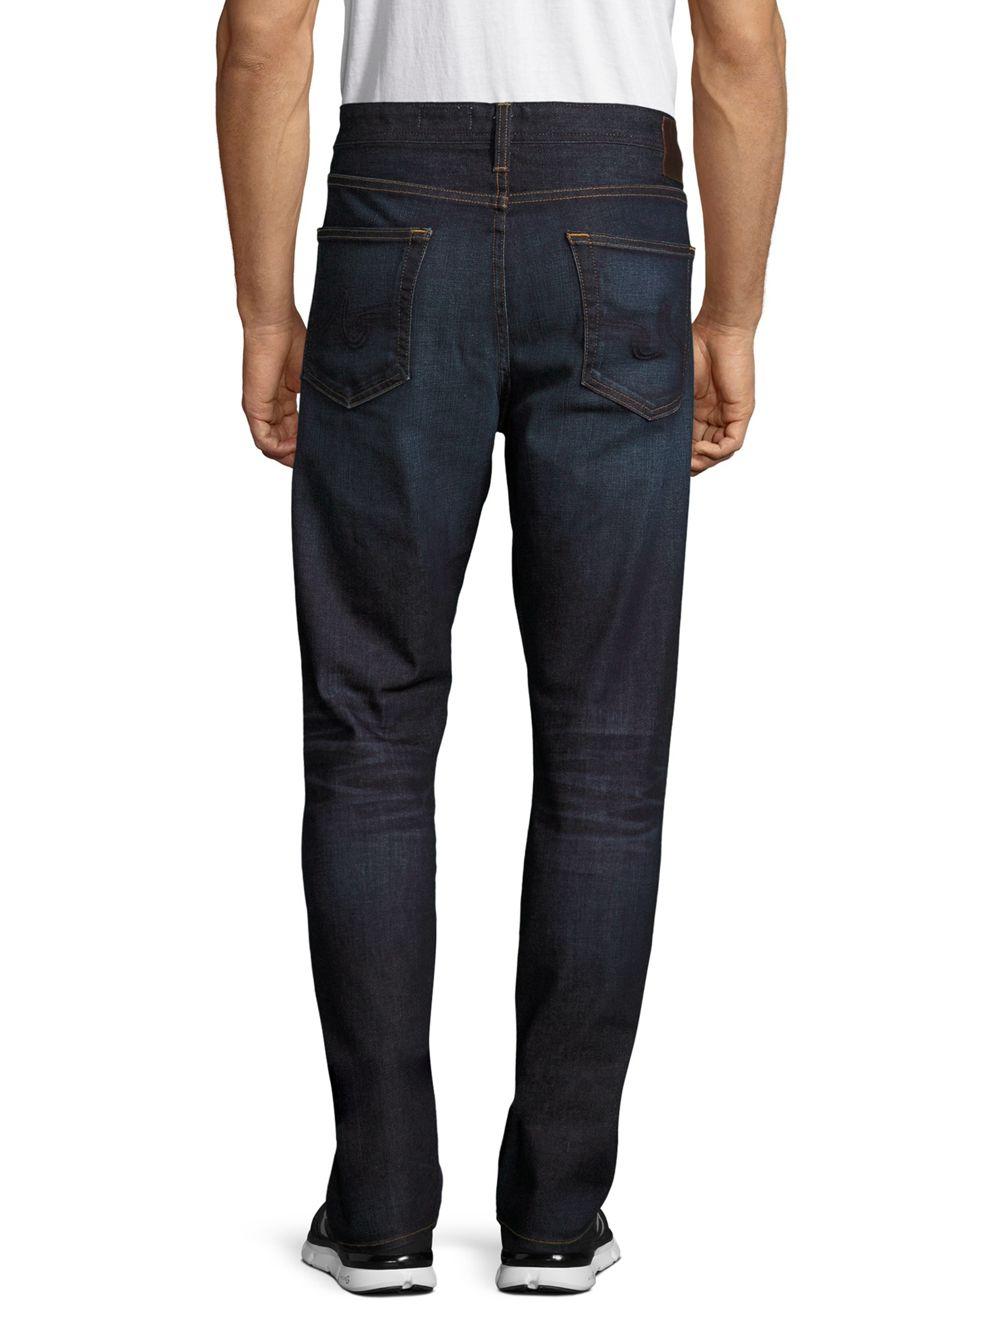 AG Jeans Dark-wash Denim Pants in Blue for Men - Lyst